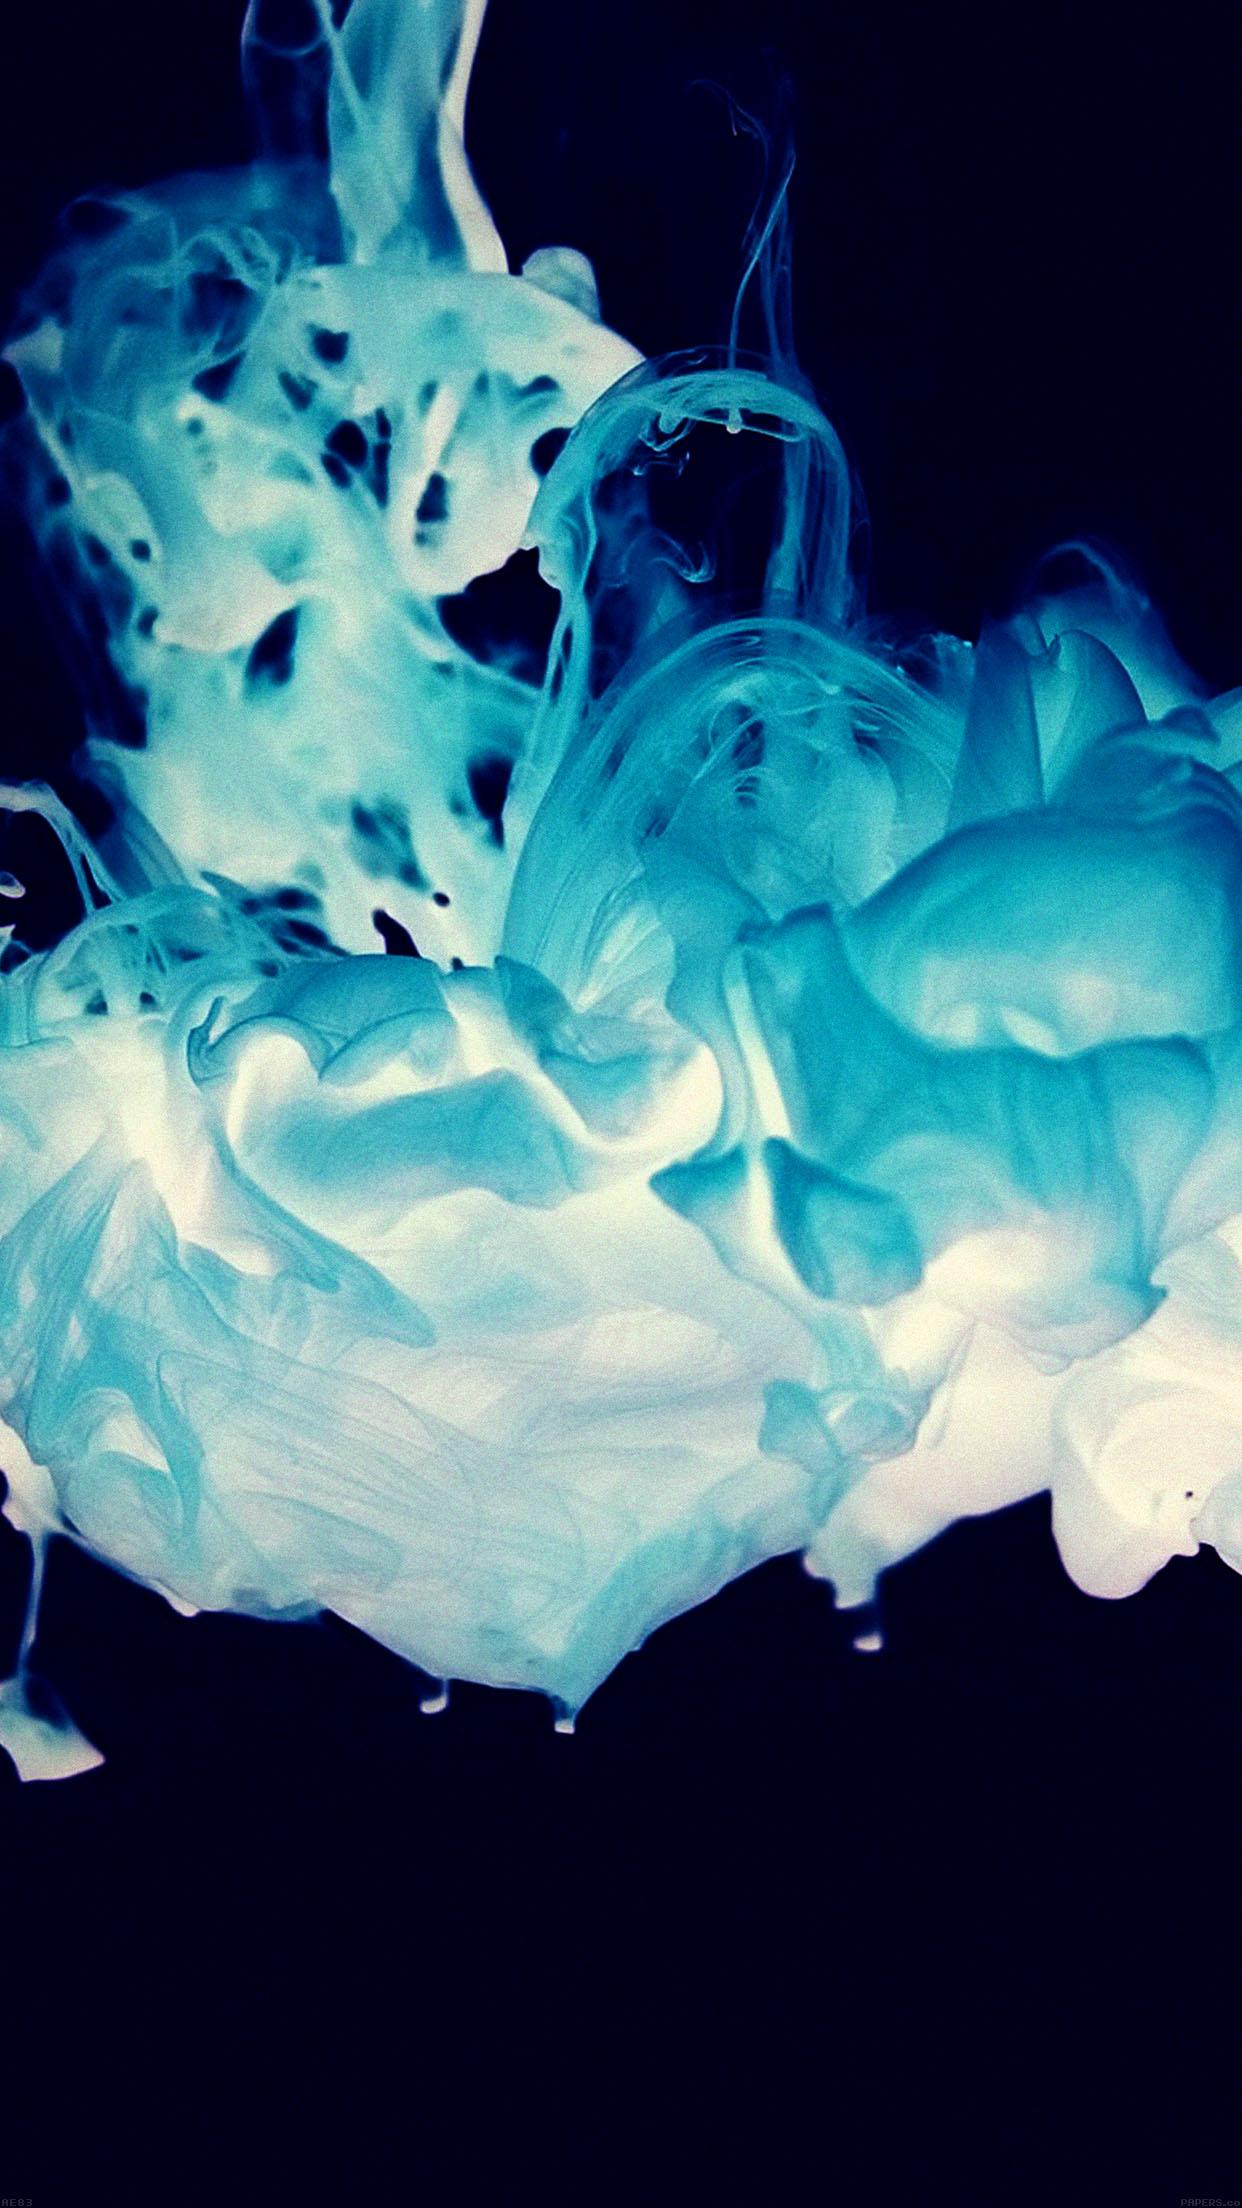 iPhone X wallpaper. blue smoke art wonderful